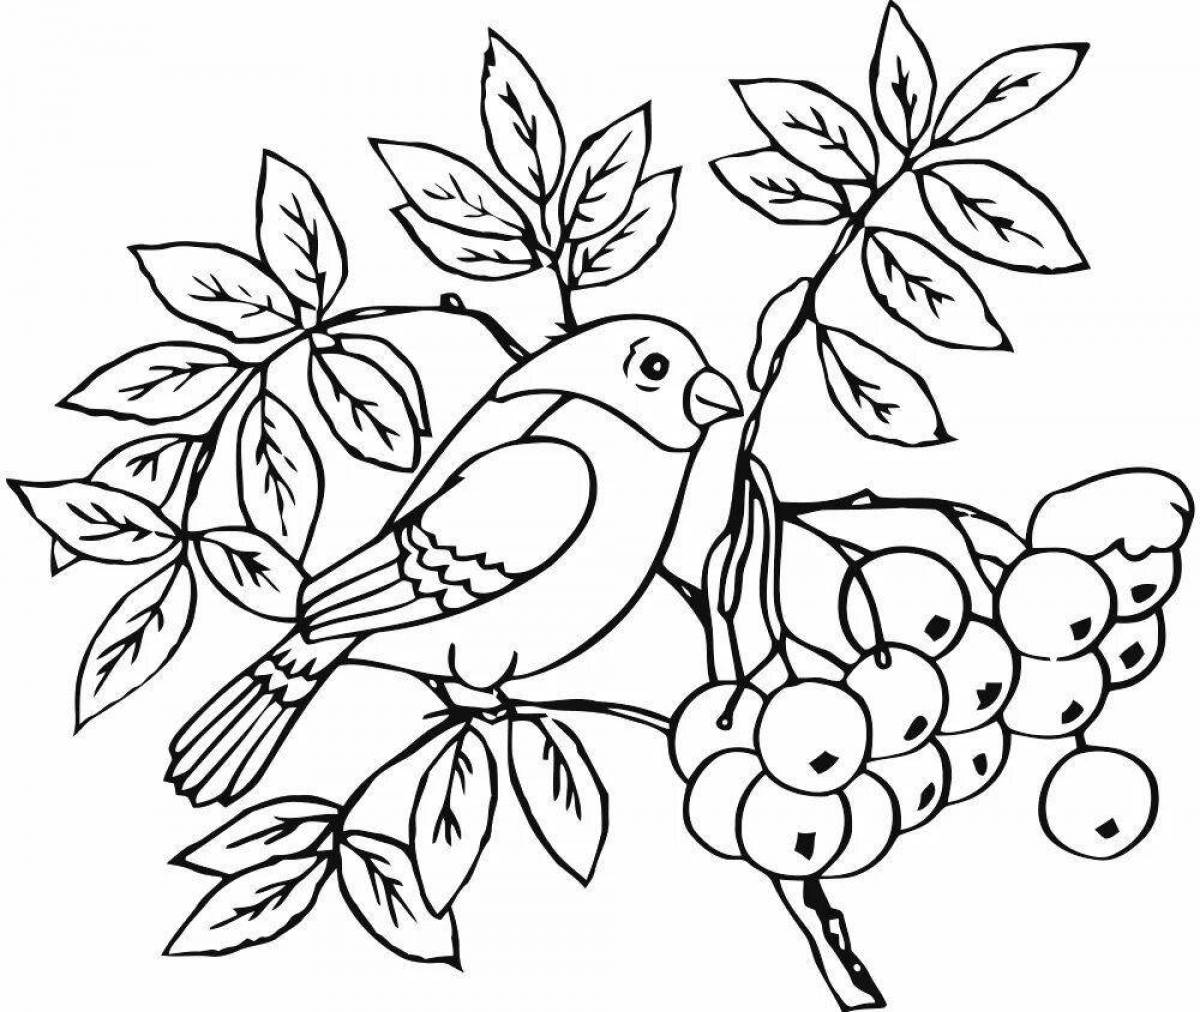 Charming coloring book bullfinch on rowan branch